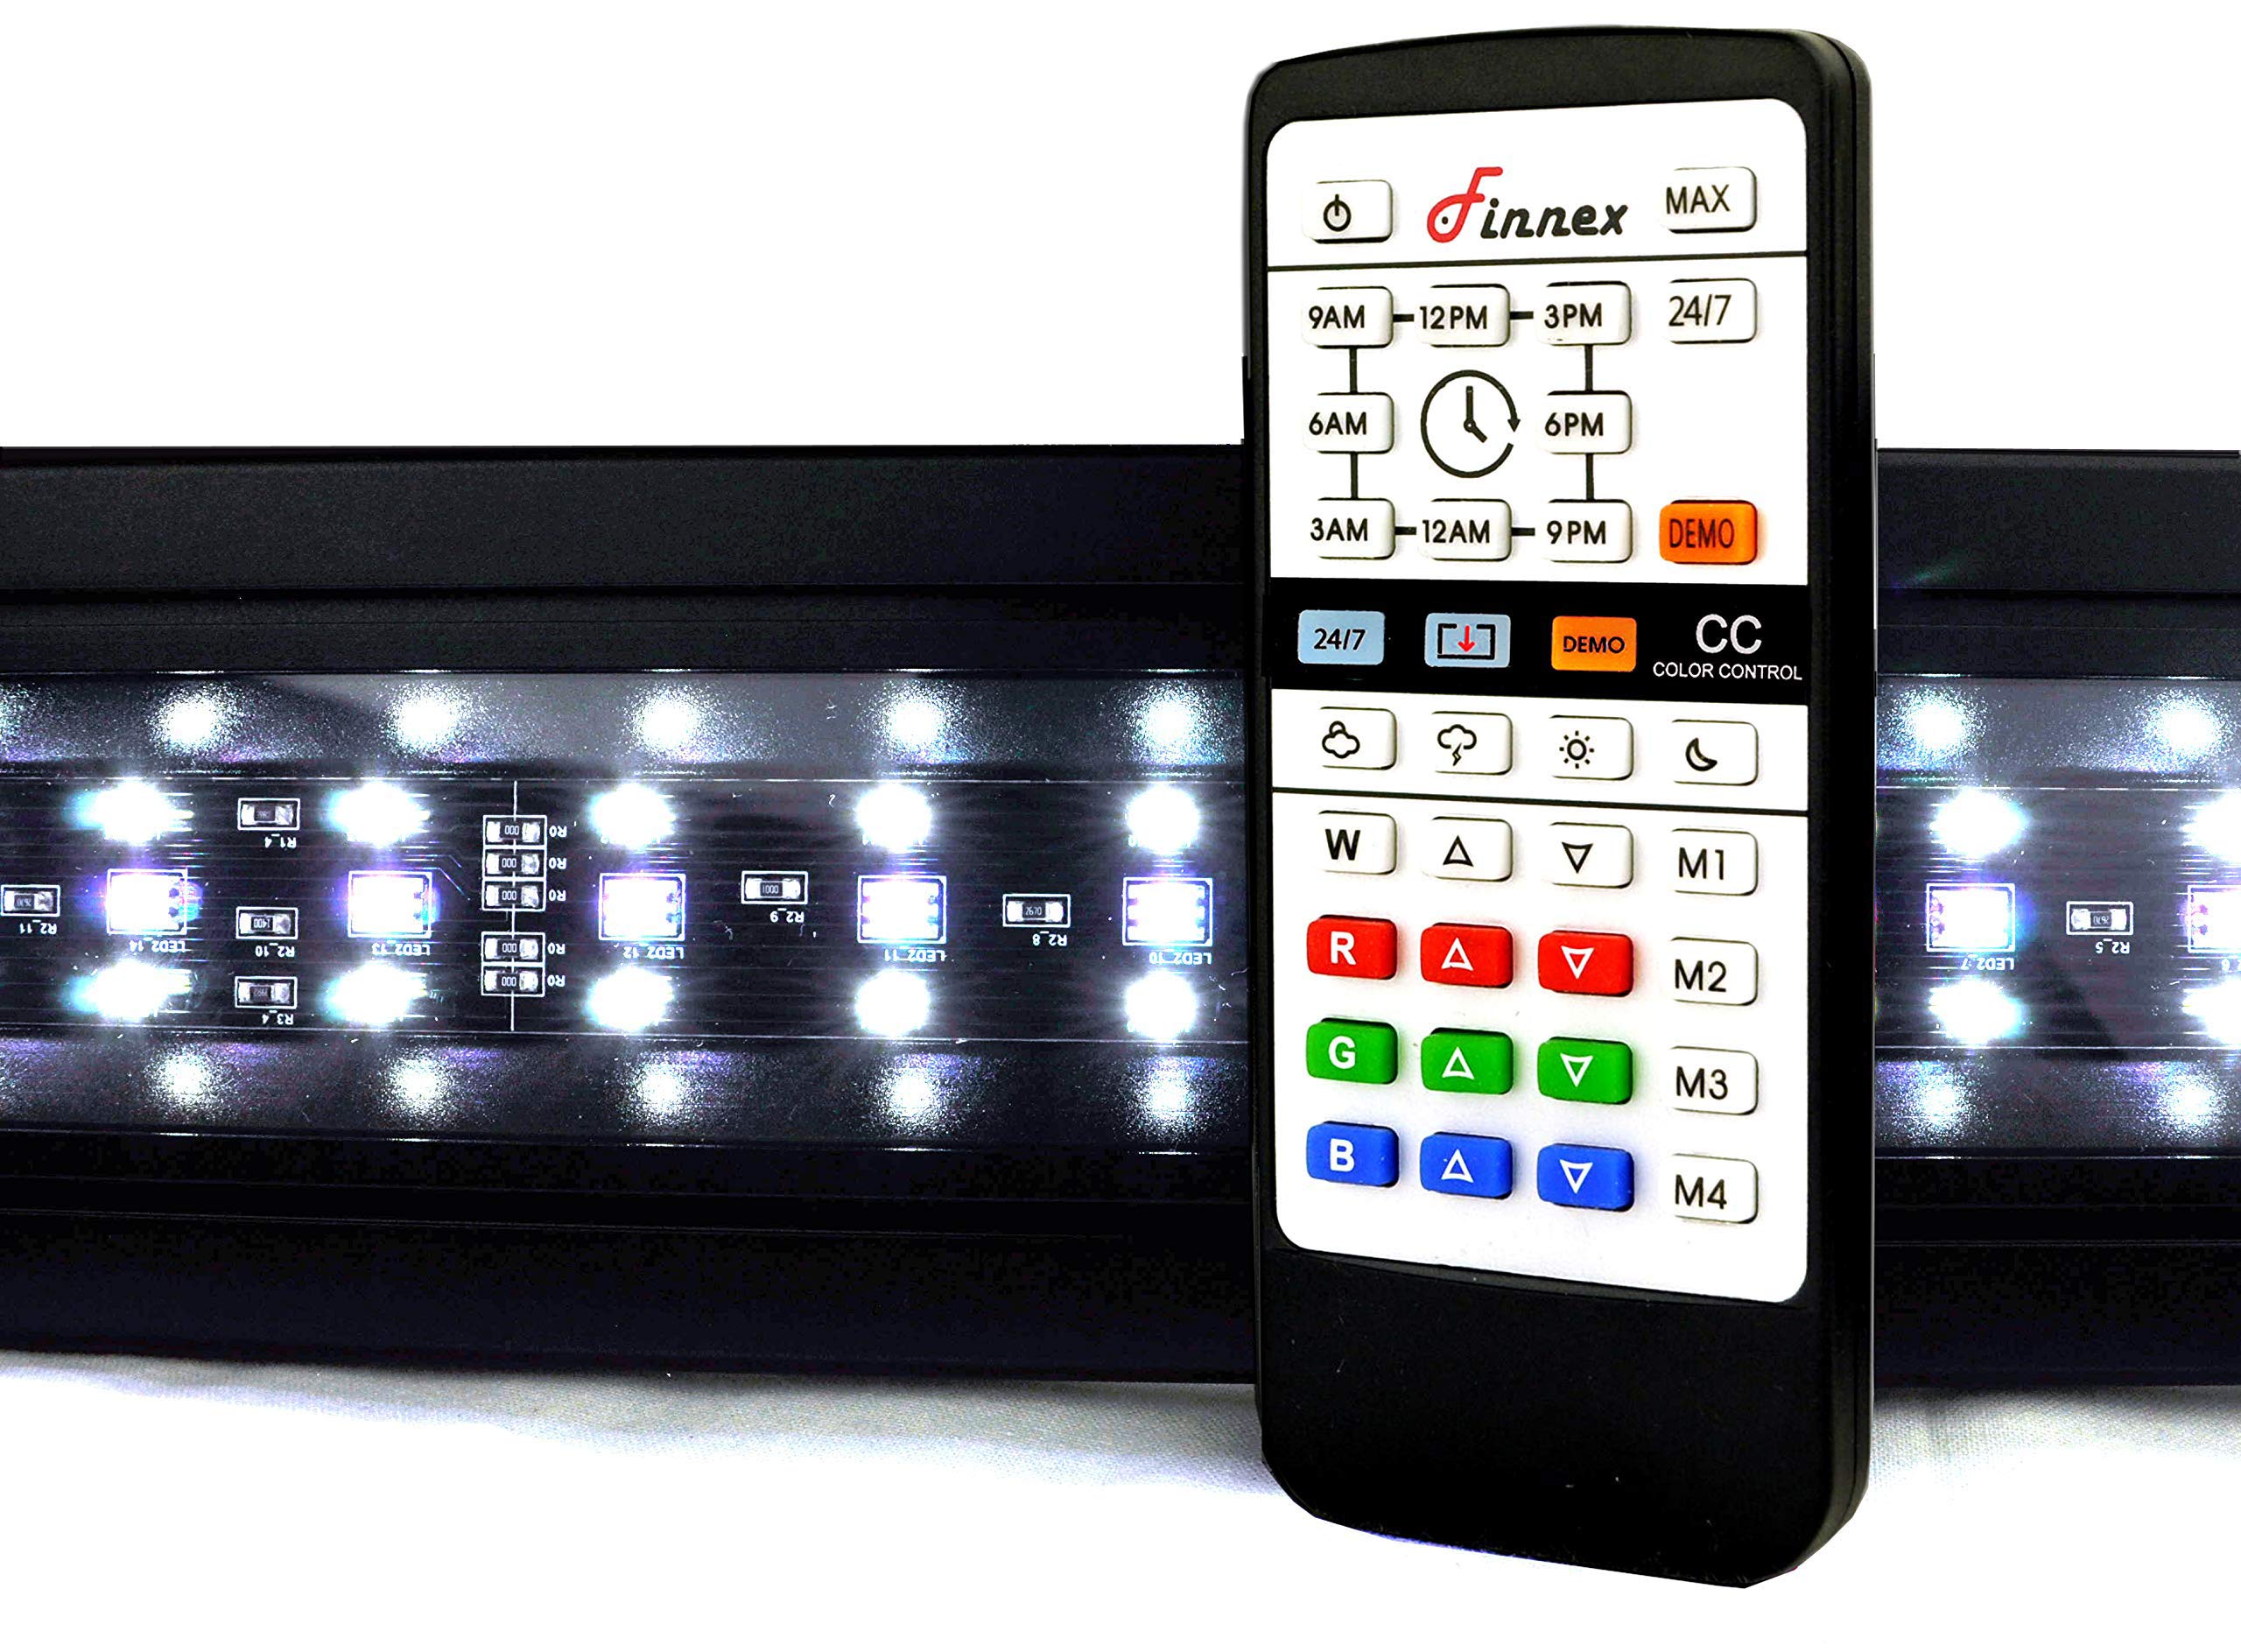 Finnex Planted+ 247 LED KLc Aquarium LED Light controllable Full Spectrum Fish Tank Light 30 Inches